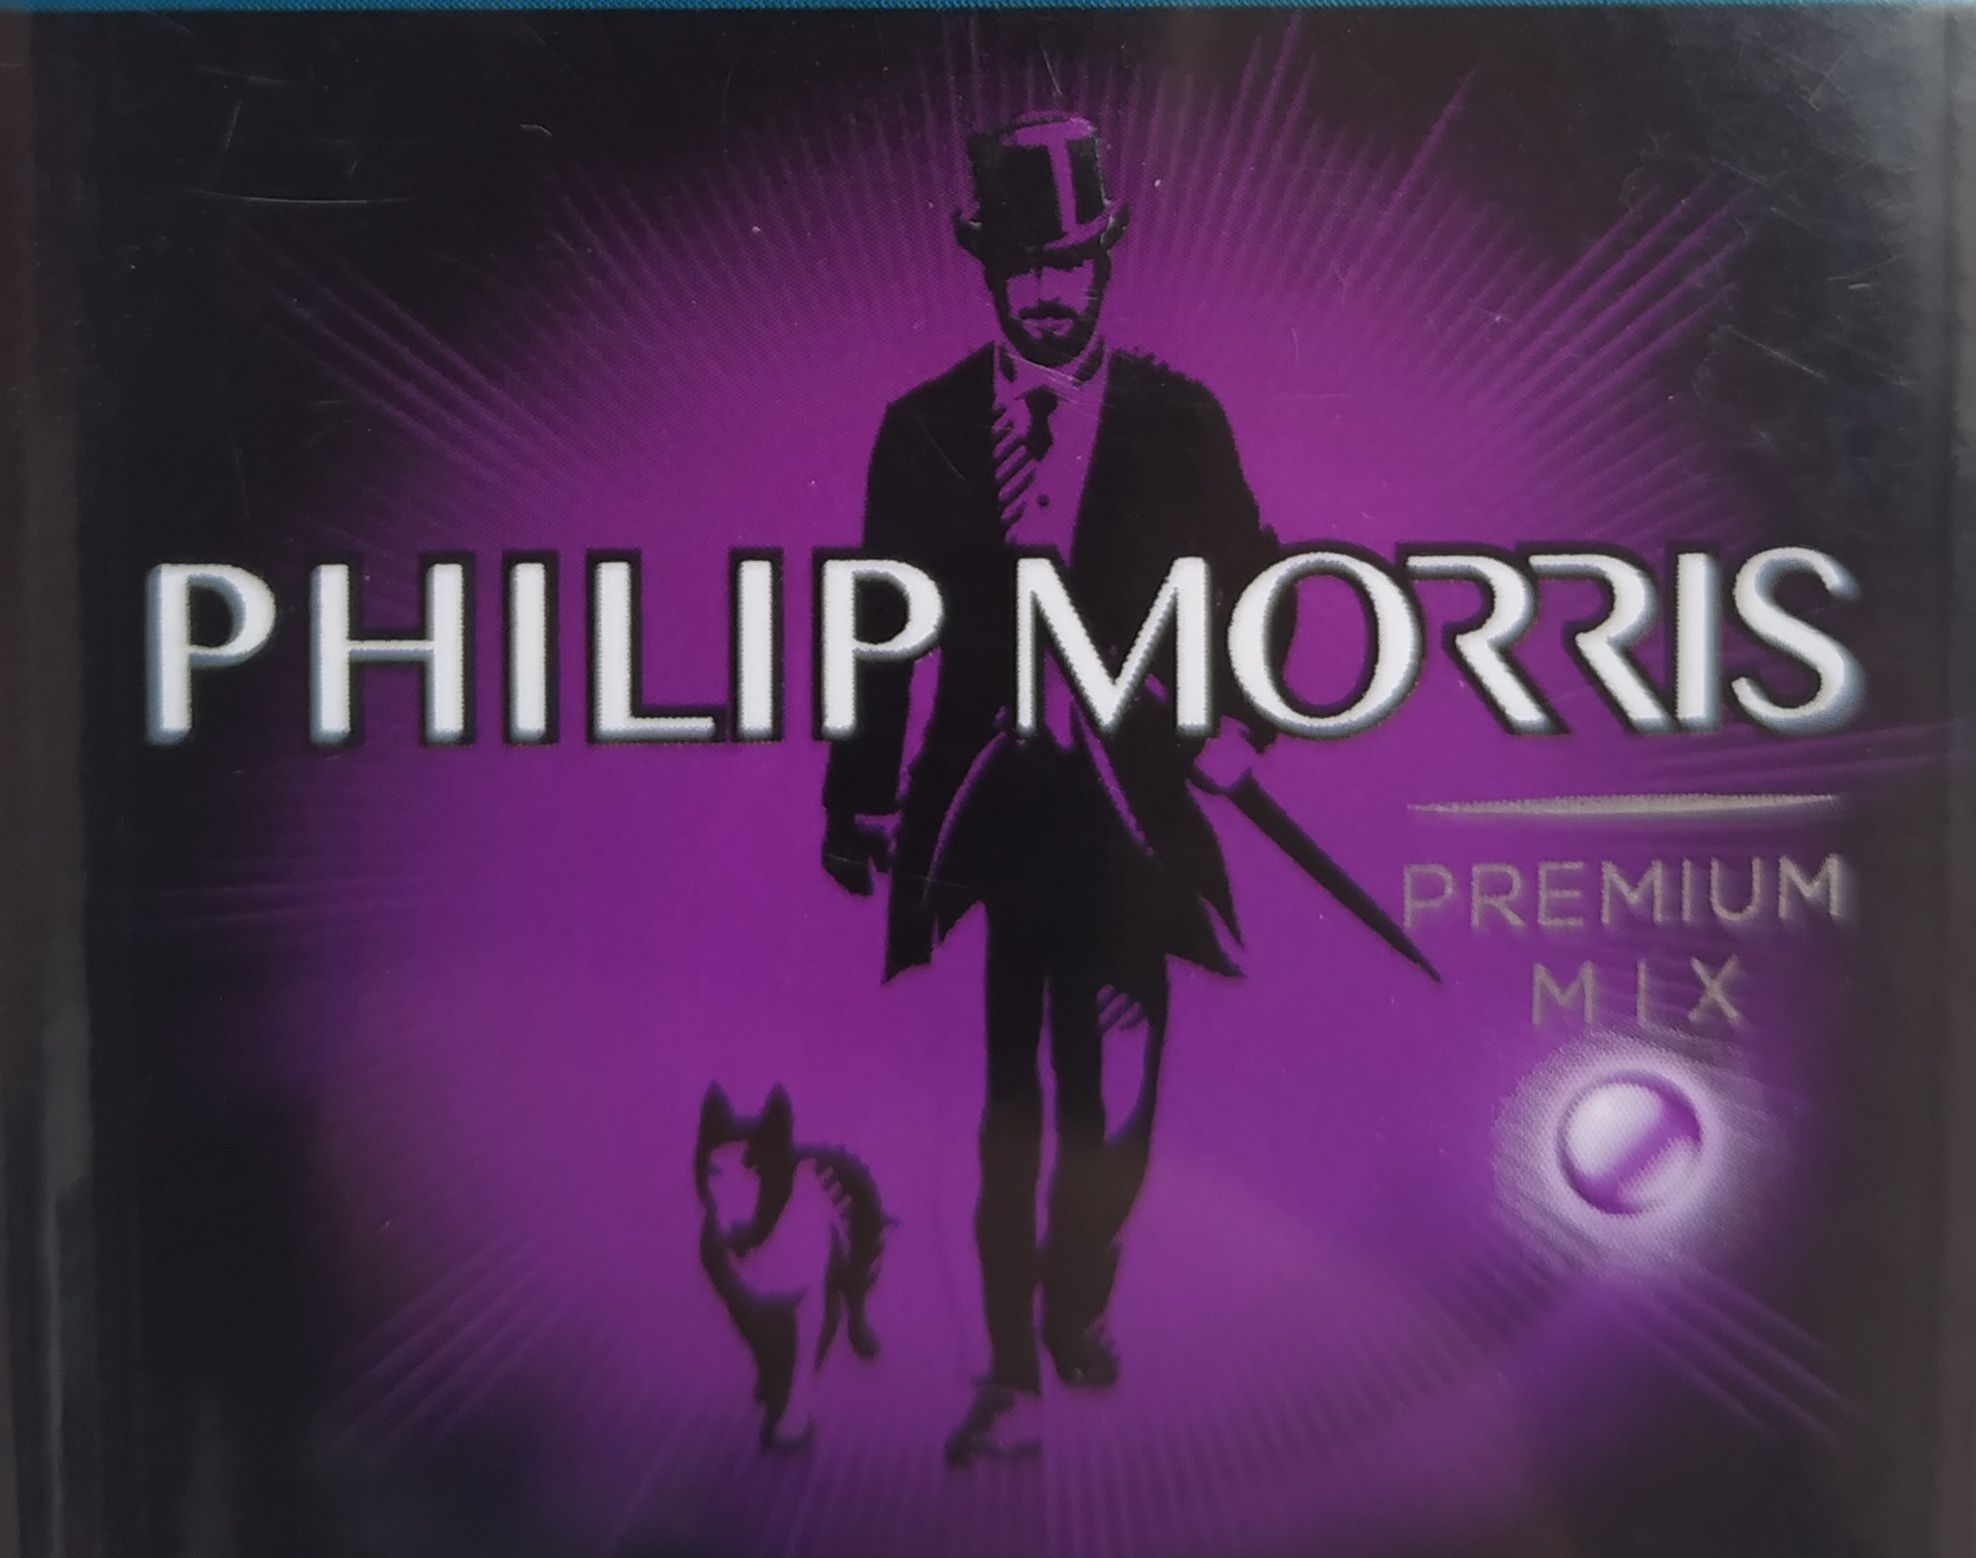 Филип моррис фиолетовый. Philip Morris Compact Premium. Сигареты Philip Morris Premium Mix. Philip Morris Compact Premium Mix. Philip Morris фиолетовый.